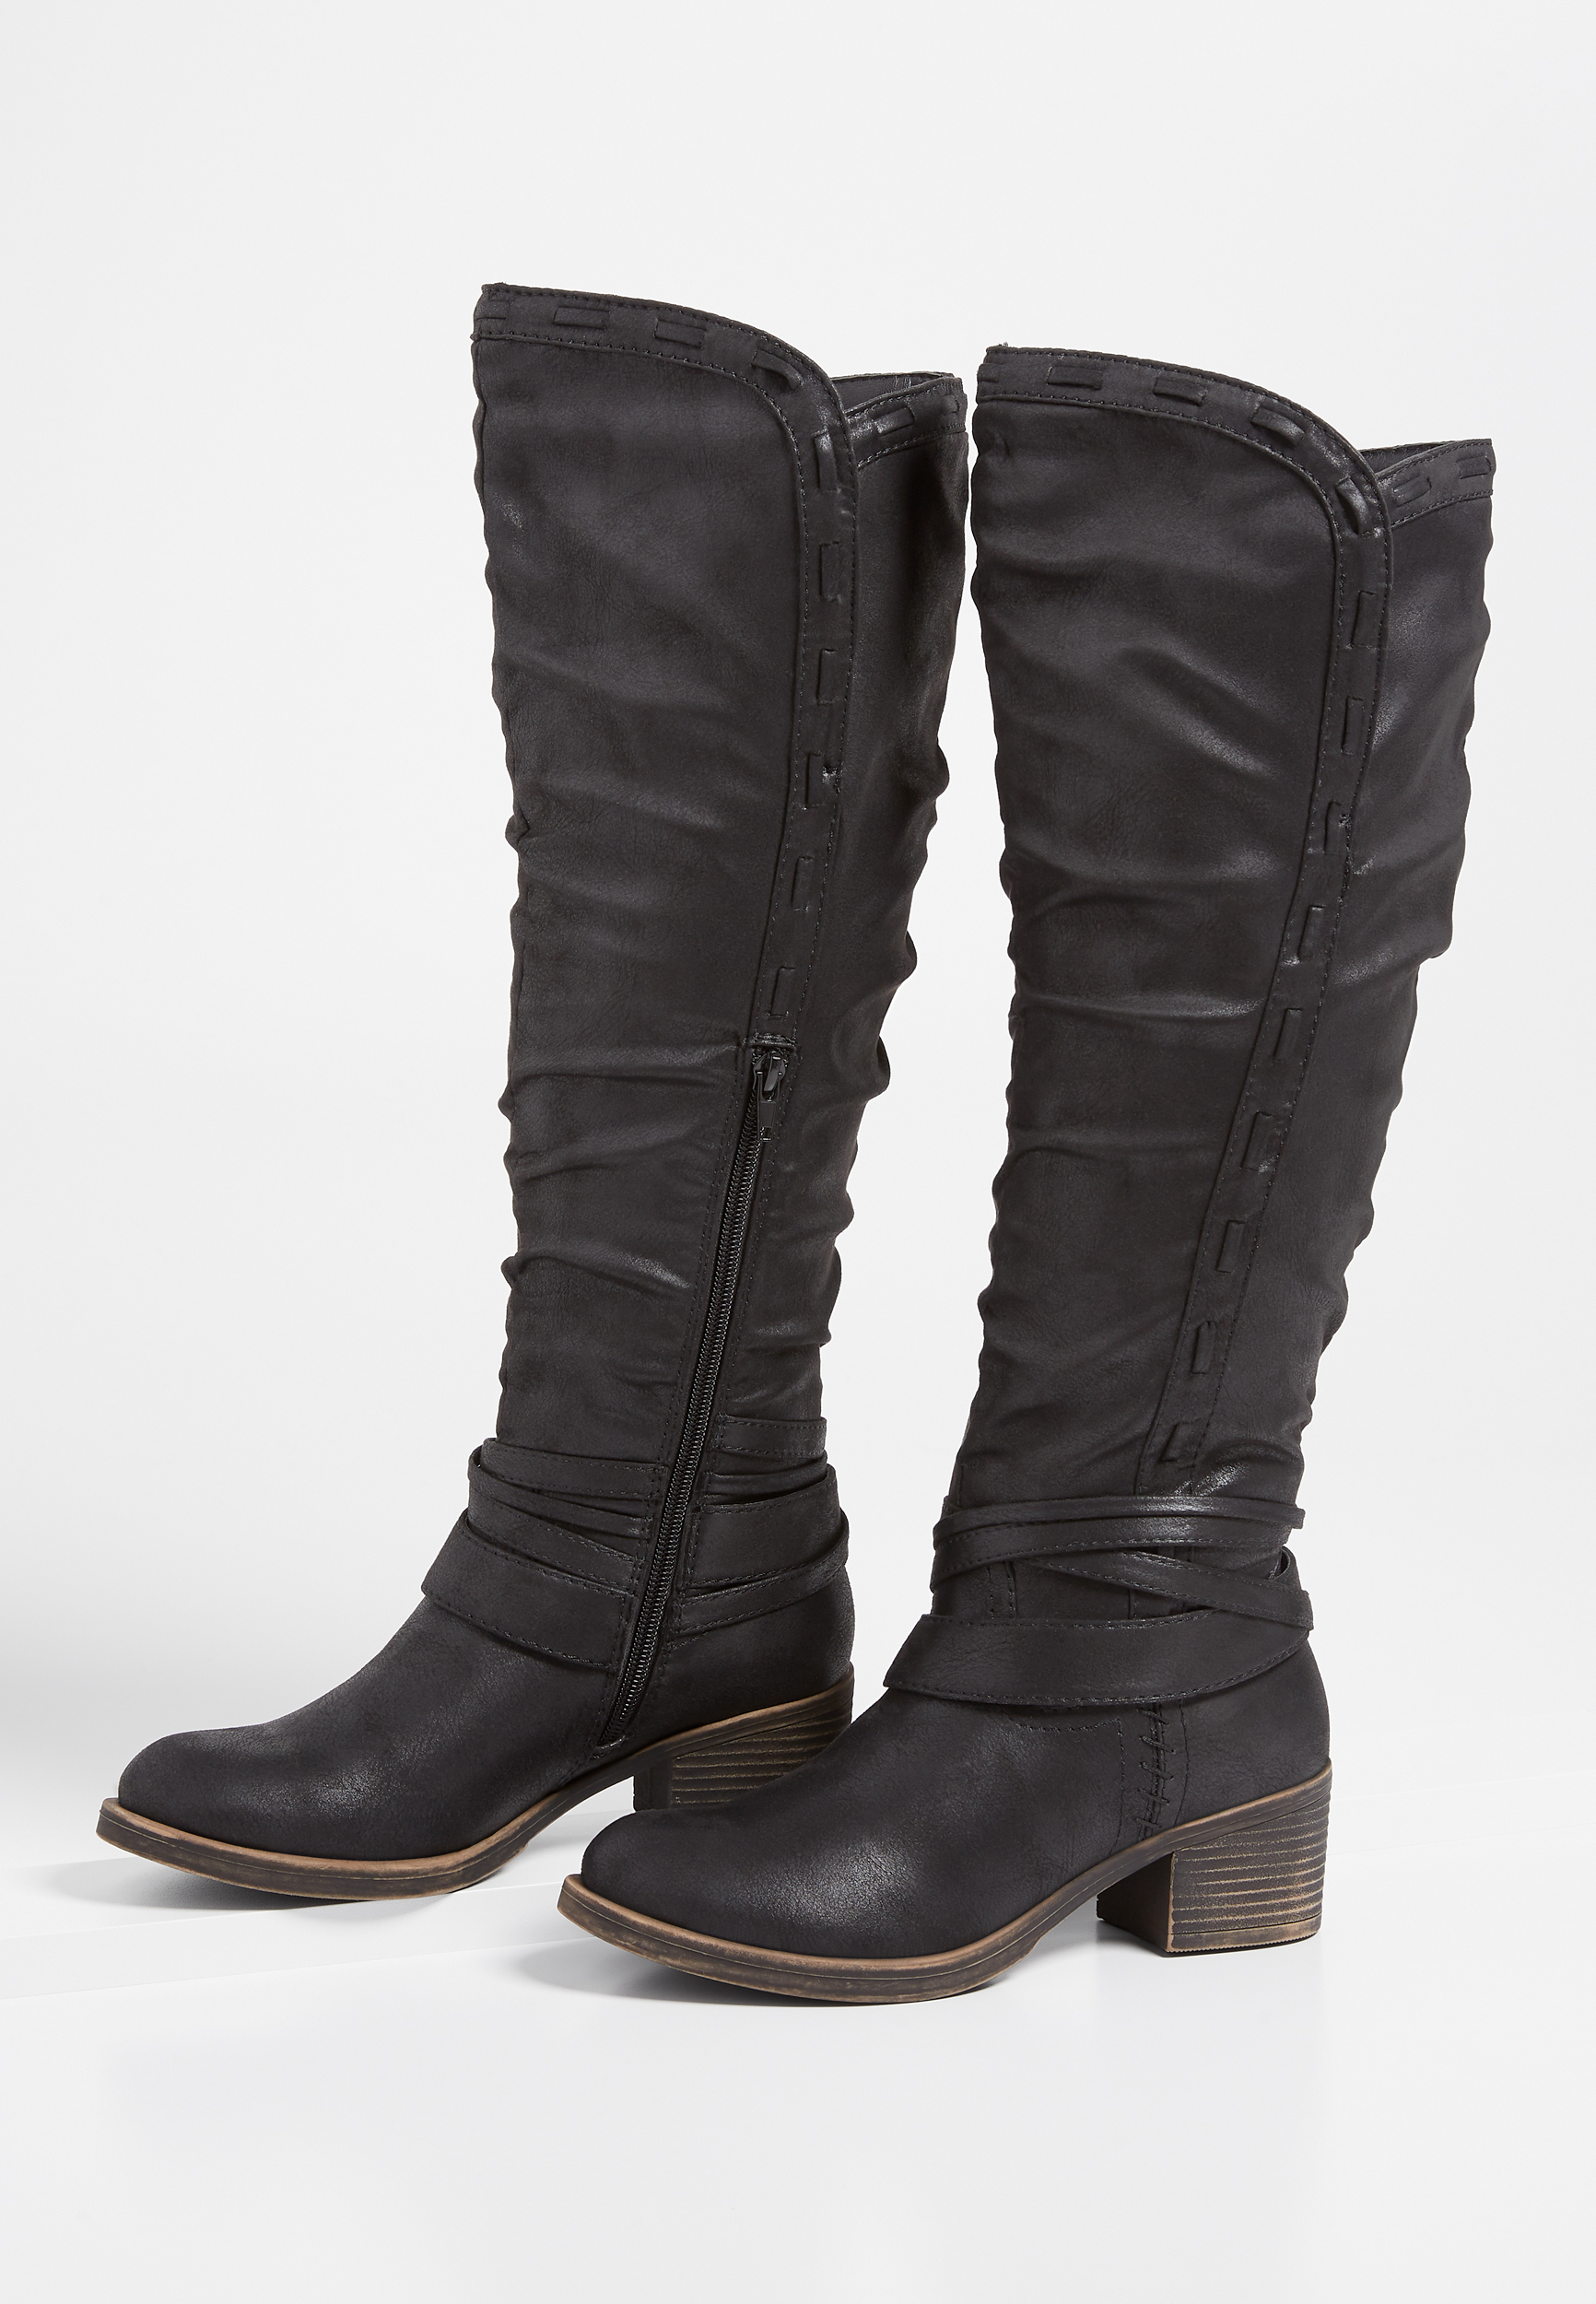 18 inch wide calf women's boots